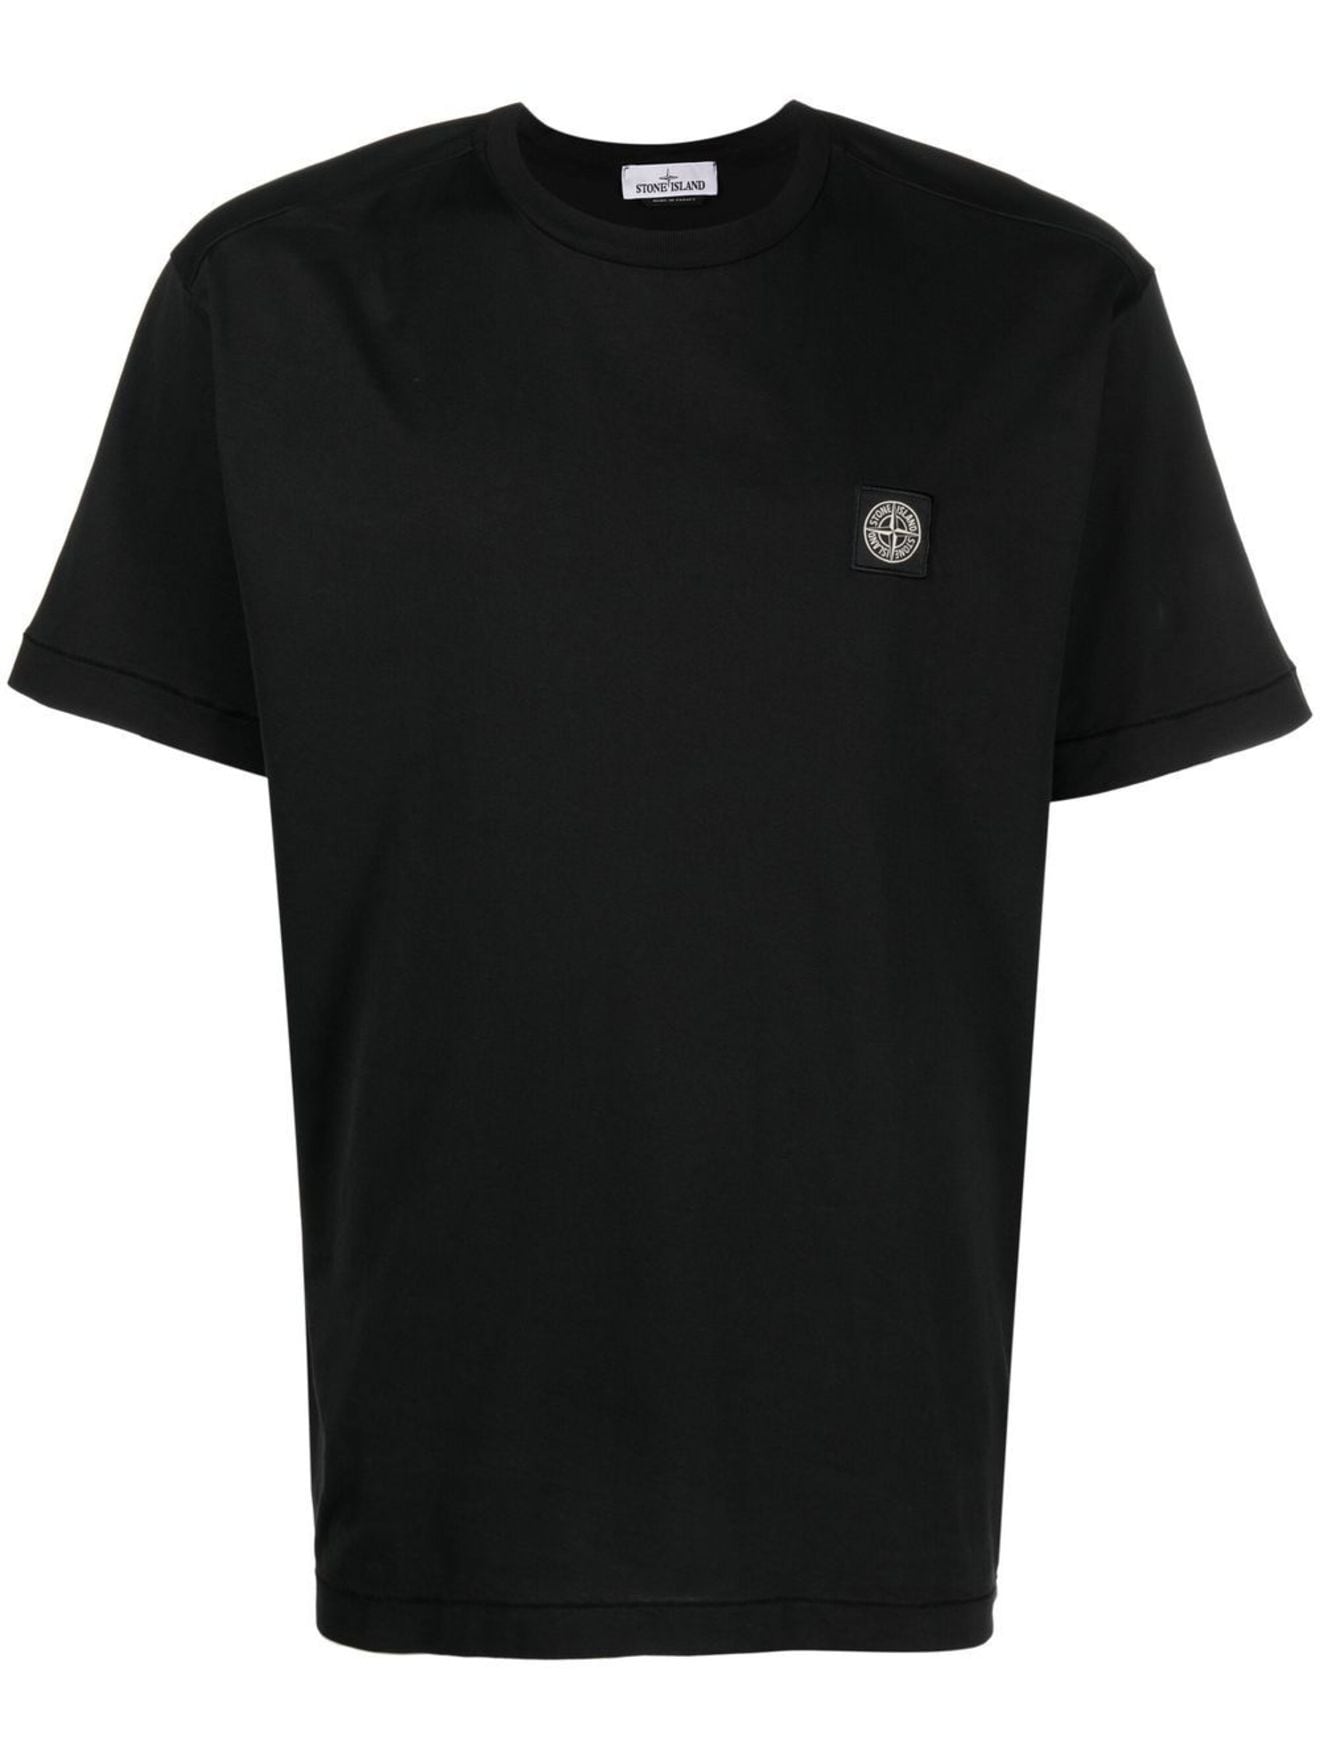 Stone Island Compass-motif cotton T-shirt black | MODES